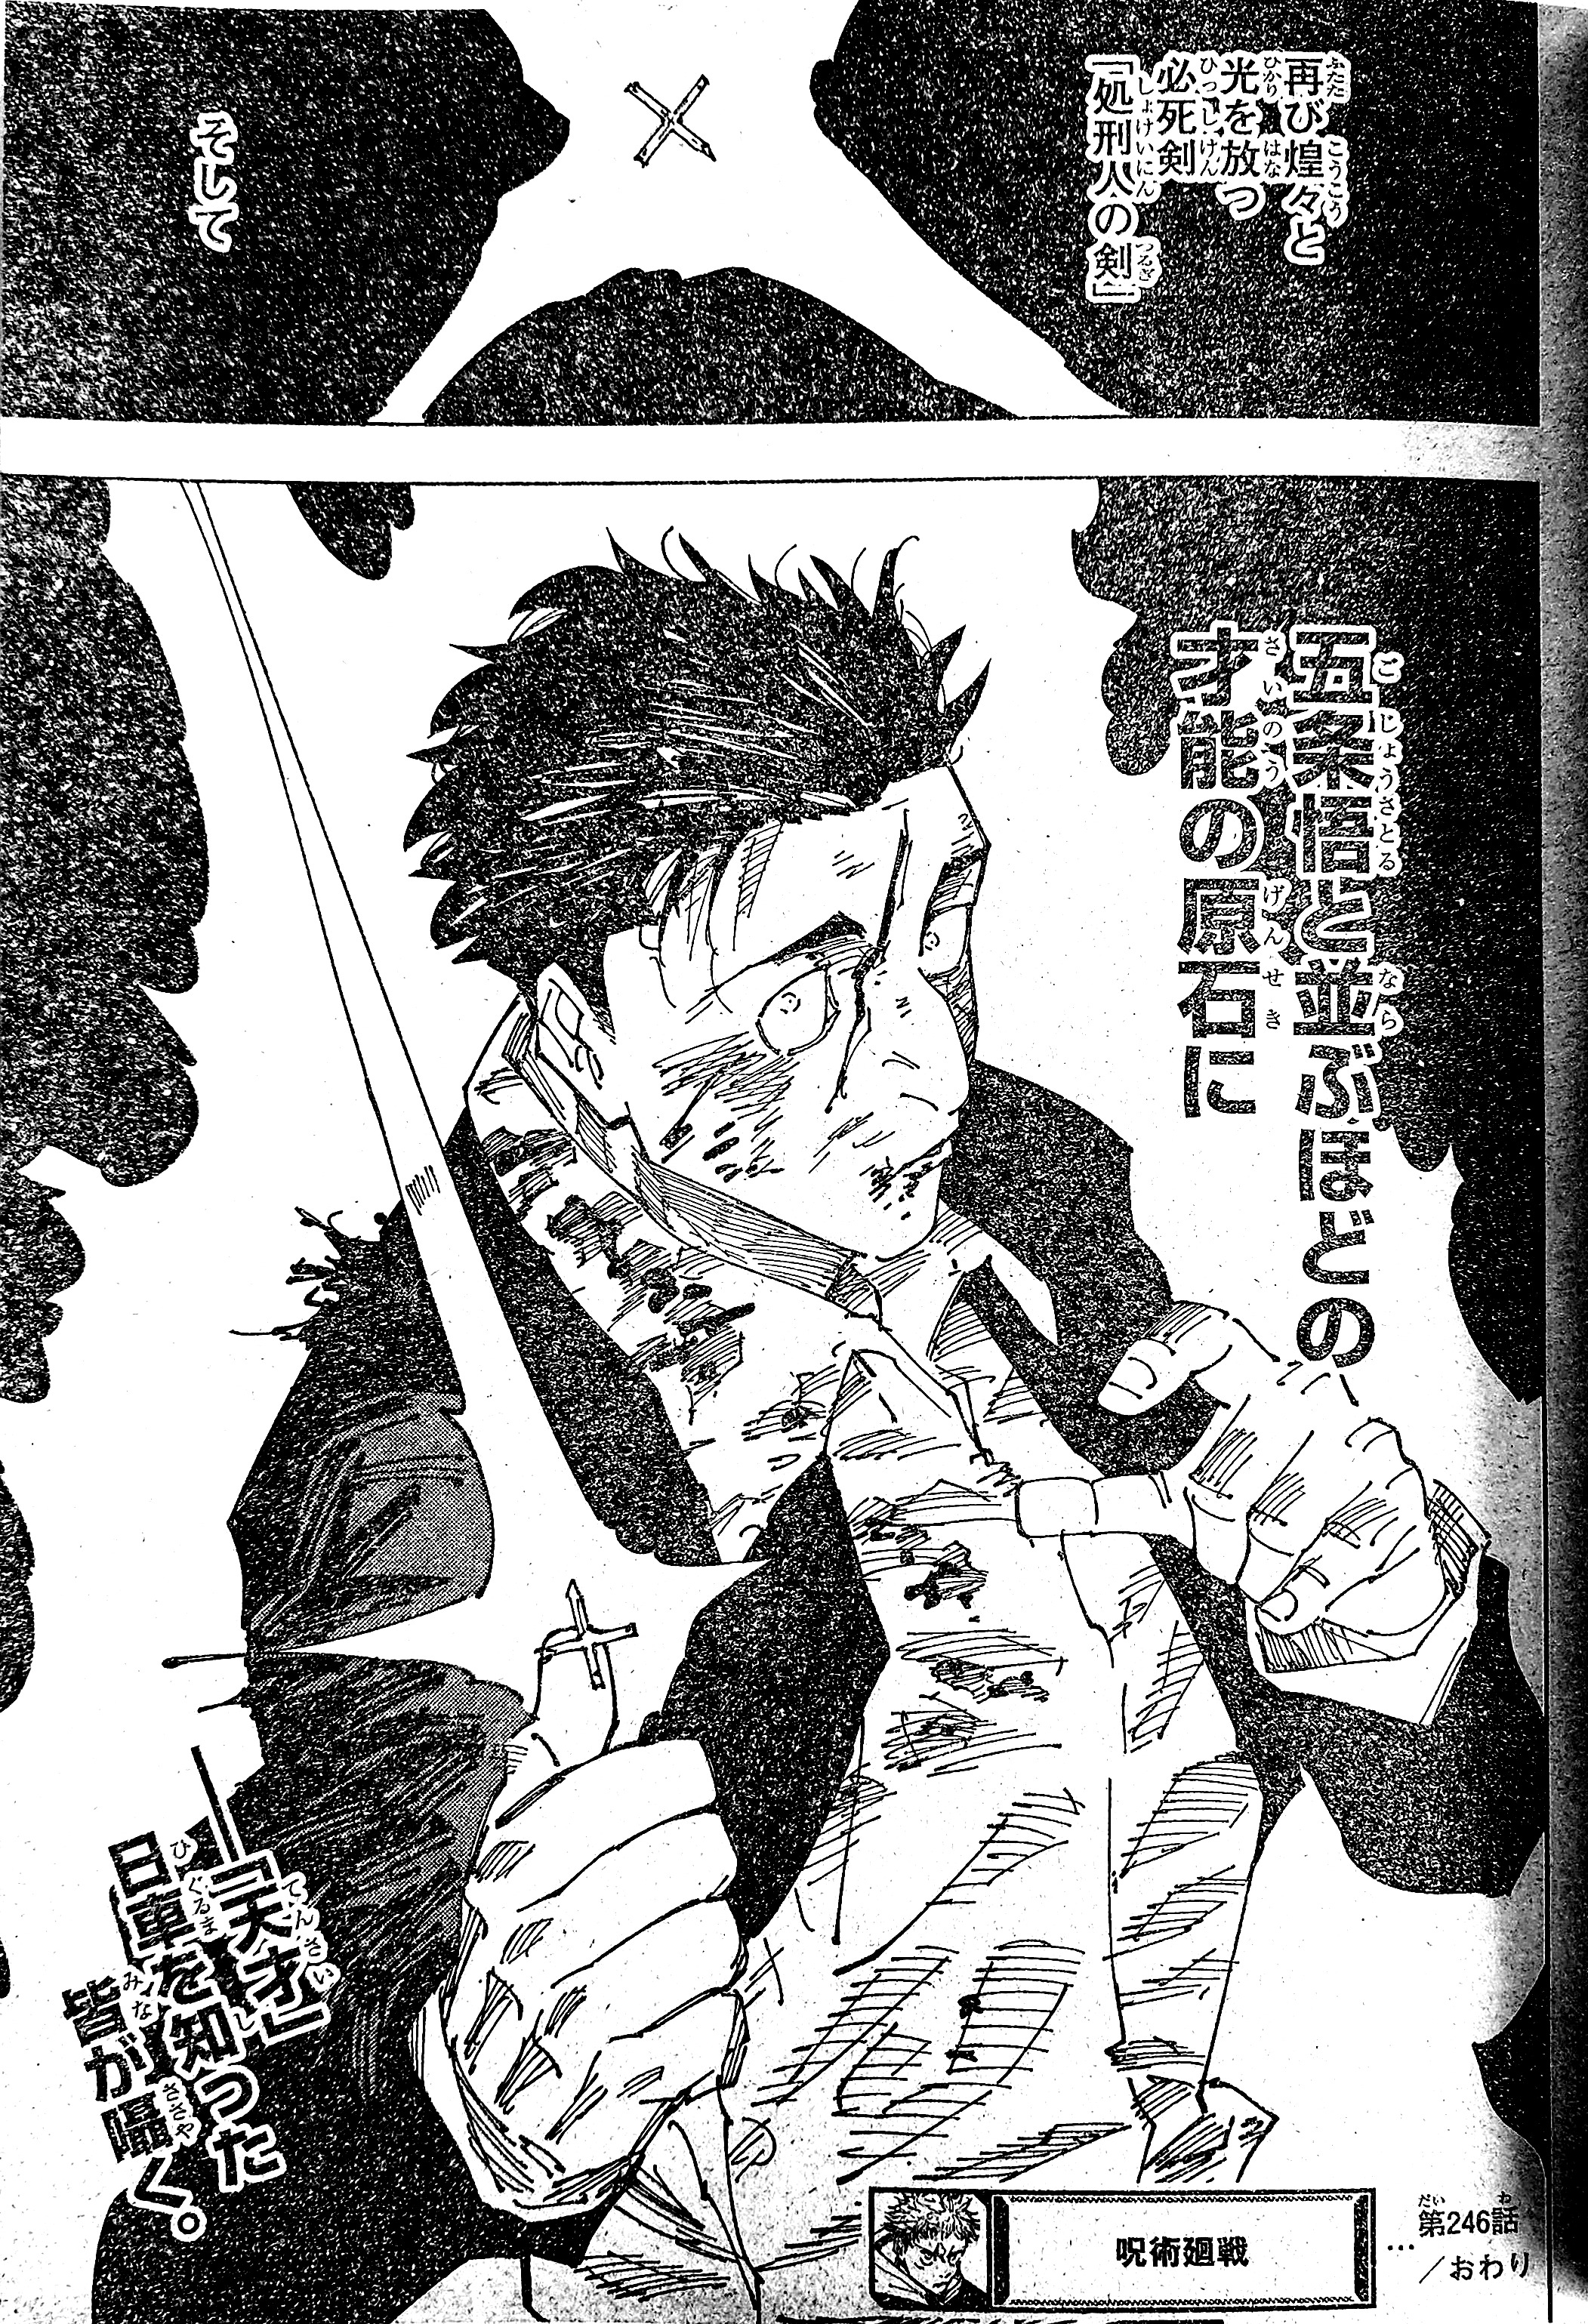 Spoilers for JJK chapter 247: Higuruma and his sword capable of one-shot Sukuna!